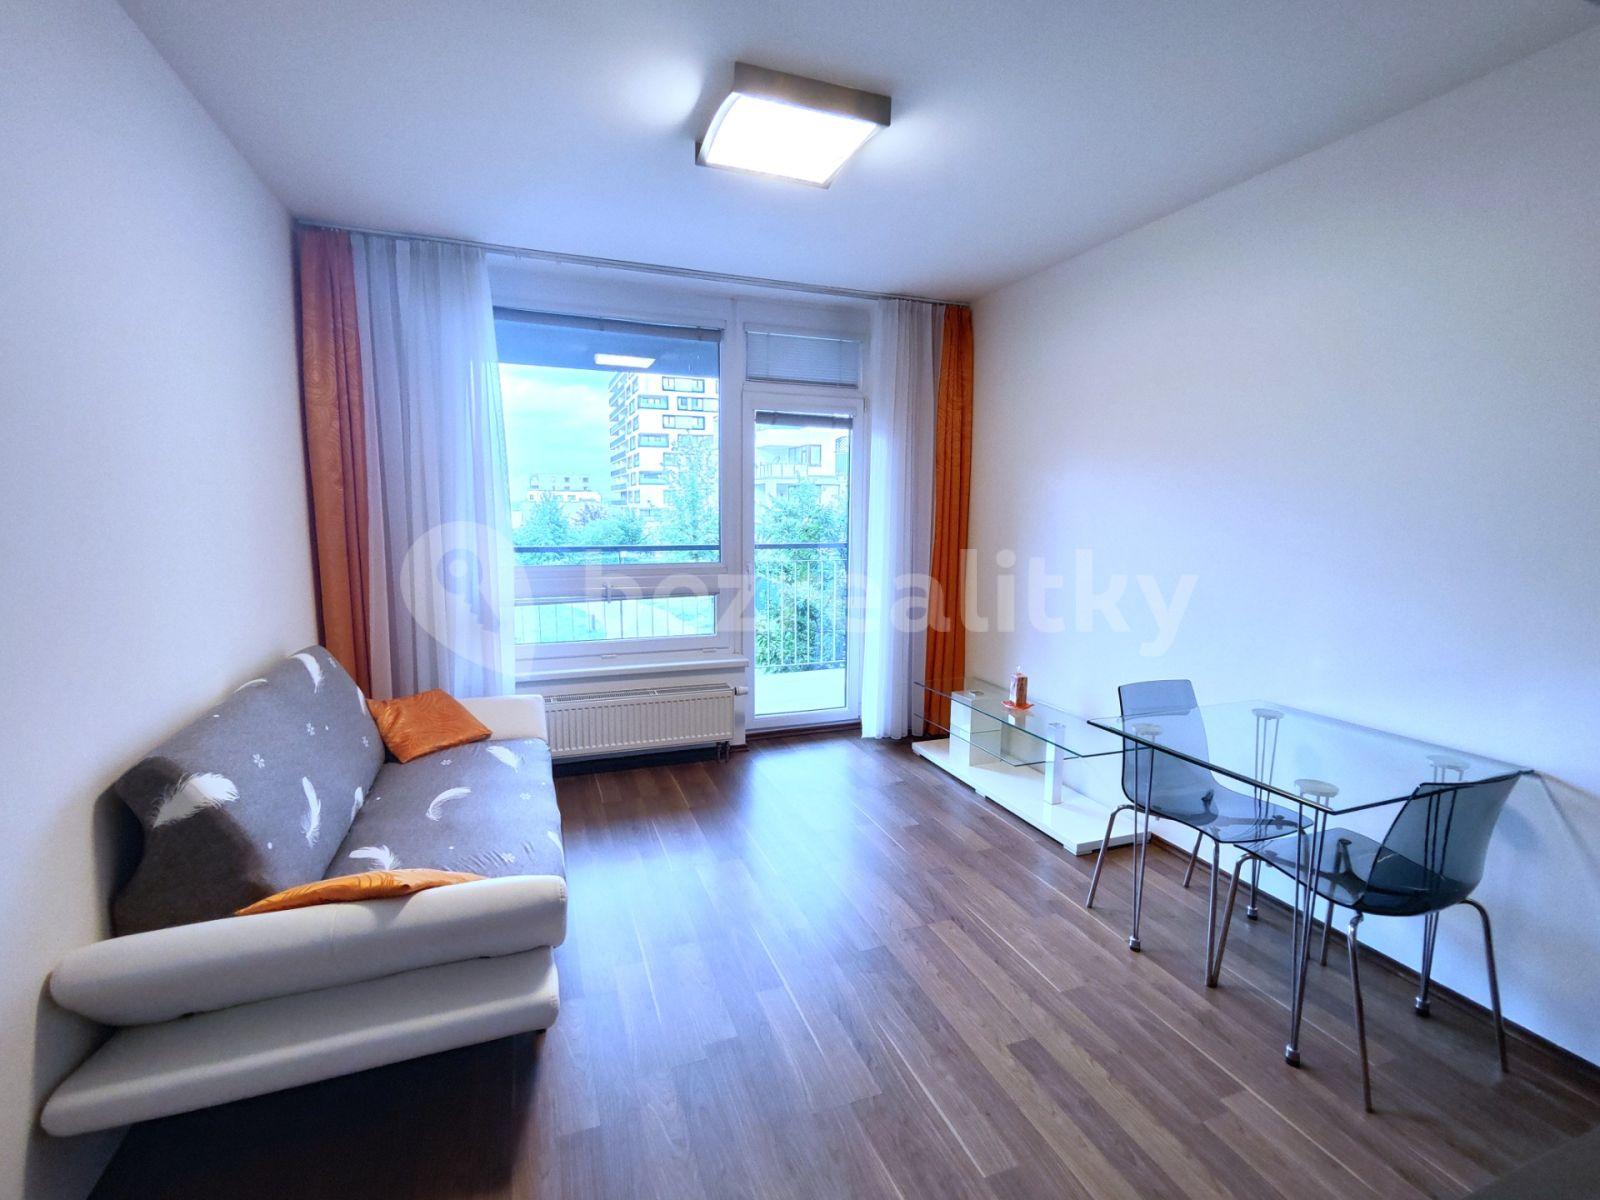 1 bedroom with open-plan kitchen flat for sale, 59 m², Svitákova, Prague, Prague